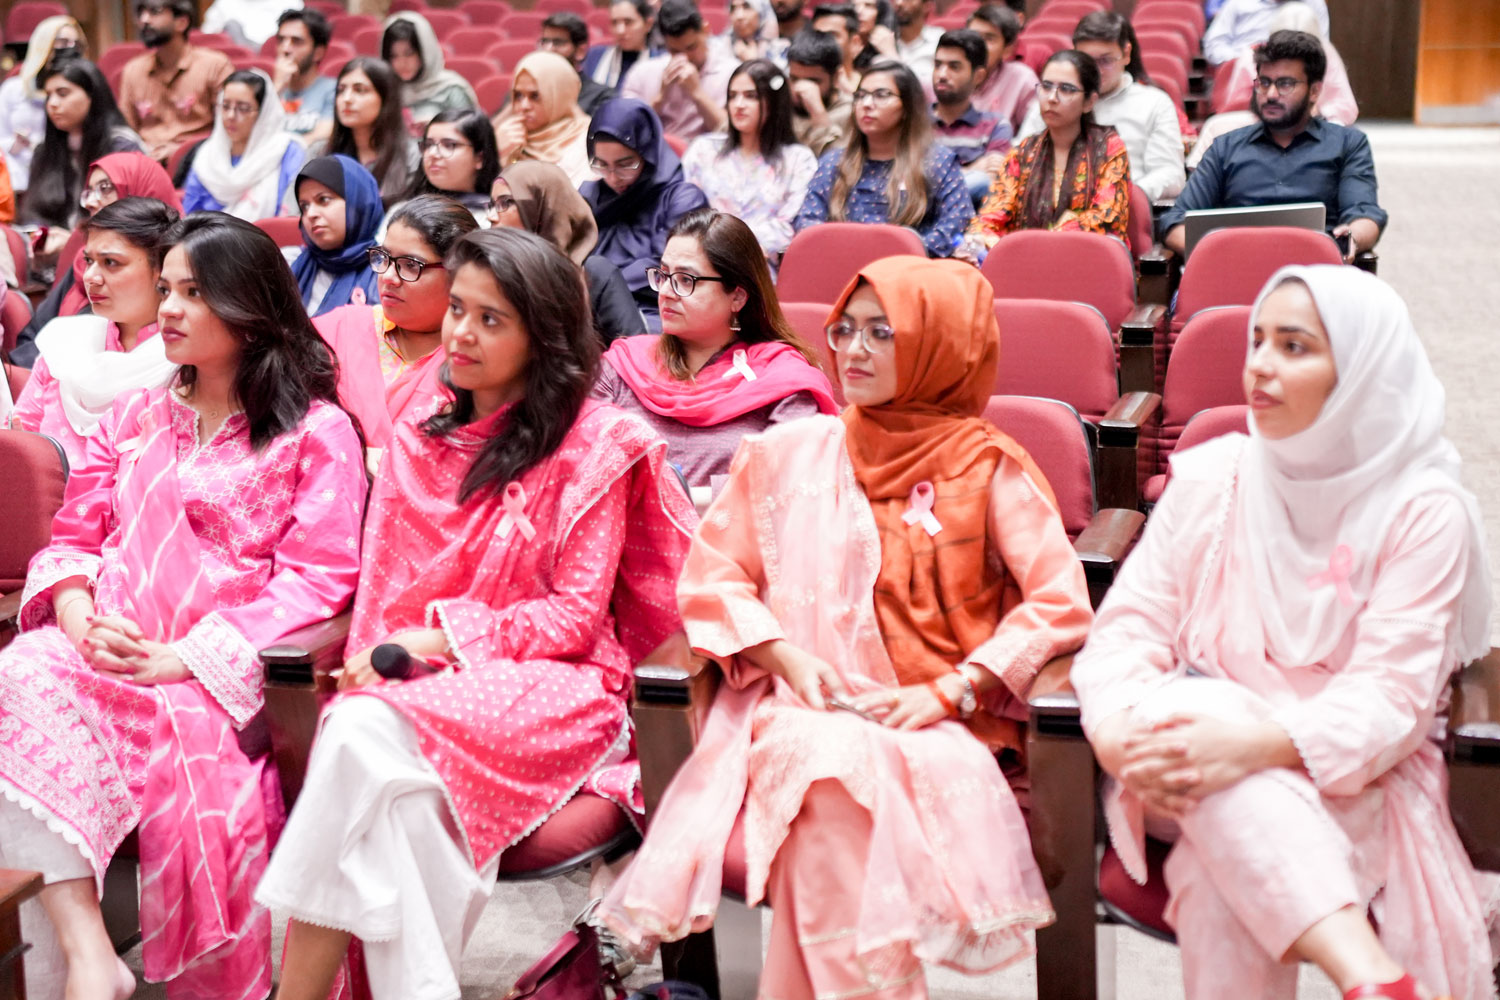 IBA Karachi partners with Himmel Pharma for Breast Cancer Awareness Program